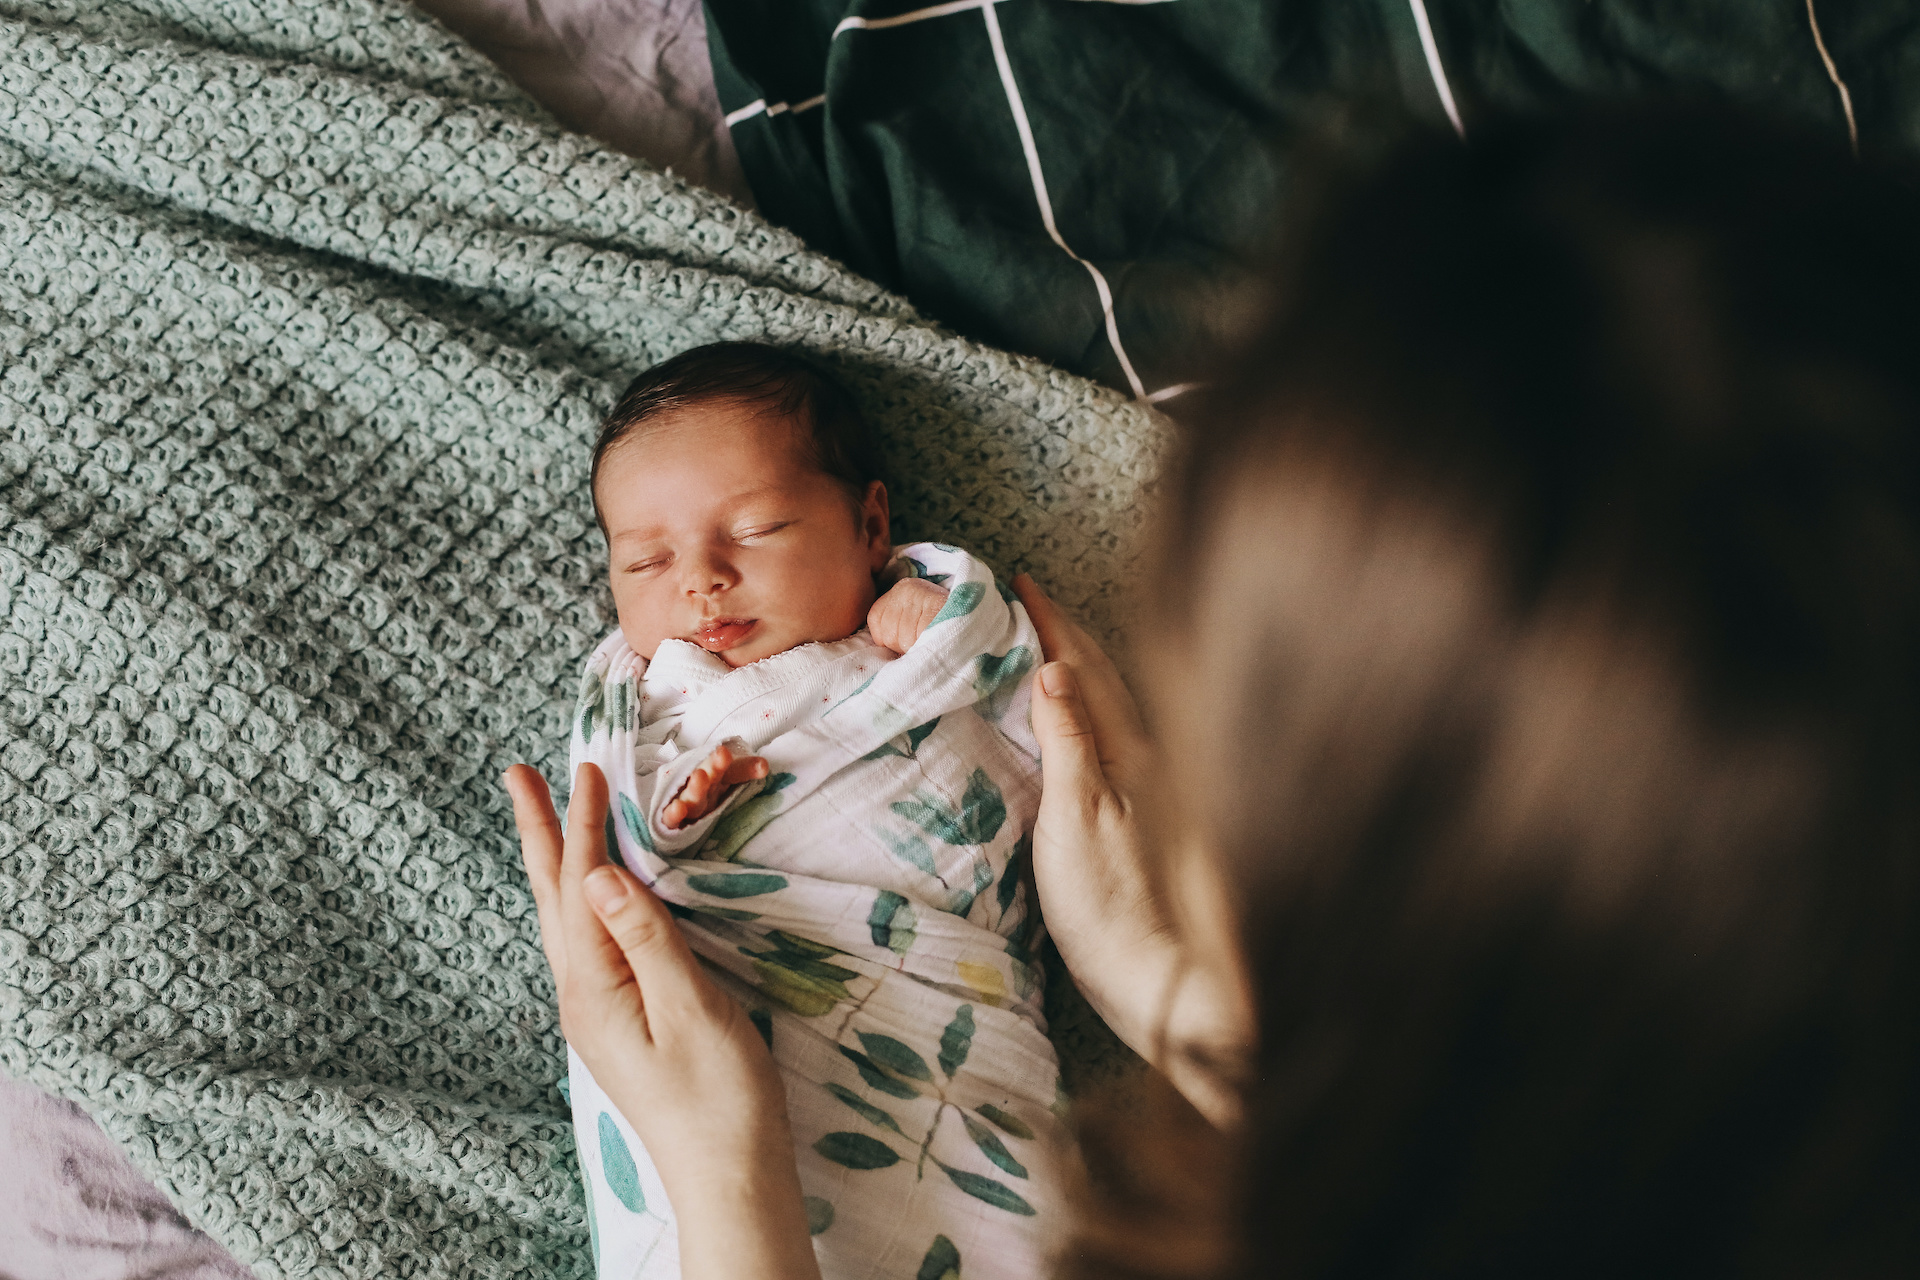 Newborn Jaundice Symptoms Testing And Treatments Parents Need To Know HealthBeautify